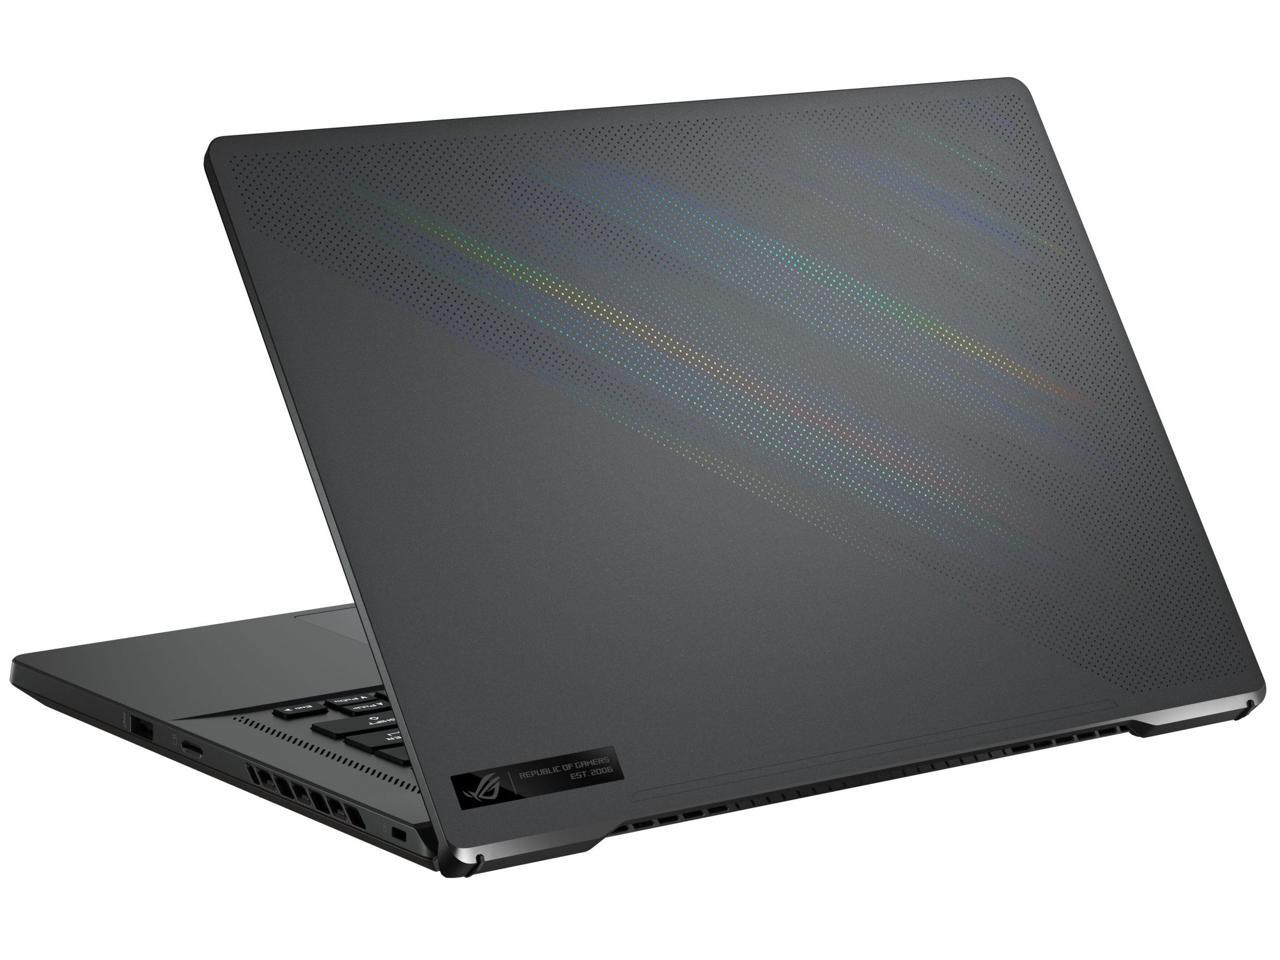 Asus Rog Zephyrus G15 Gaming & Entertainment Laptop (Amd Ryzen 9 5900Hs 8-Core, 24Gb Ram, 1Tb Pcie